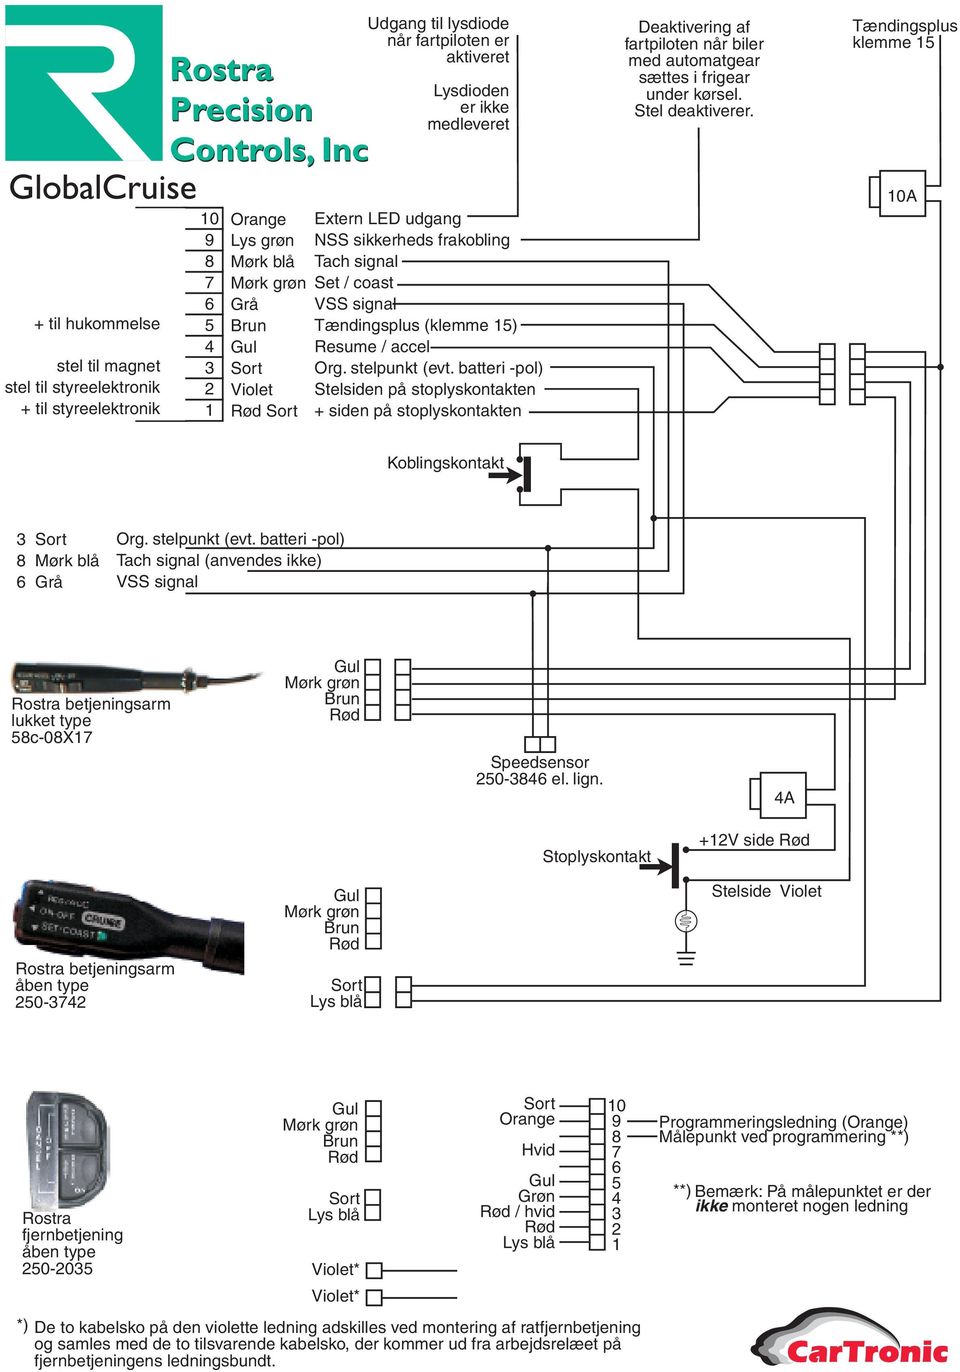 frakobling Tach signal Set / coast VSS signal Tændingsplus (klemme 15) Resume / accel Org. stelpunkt (evt.